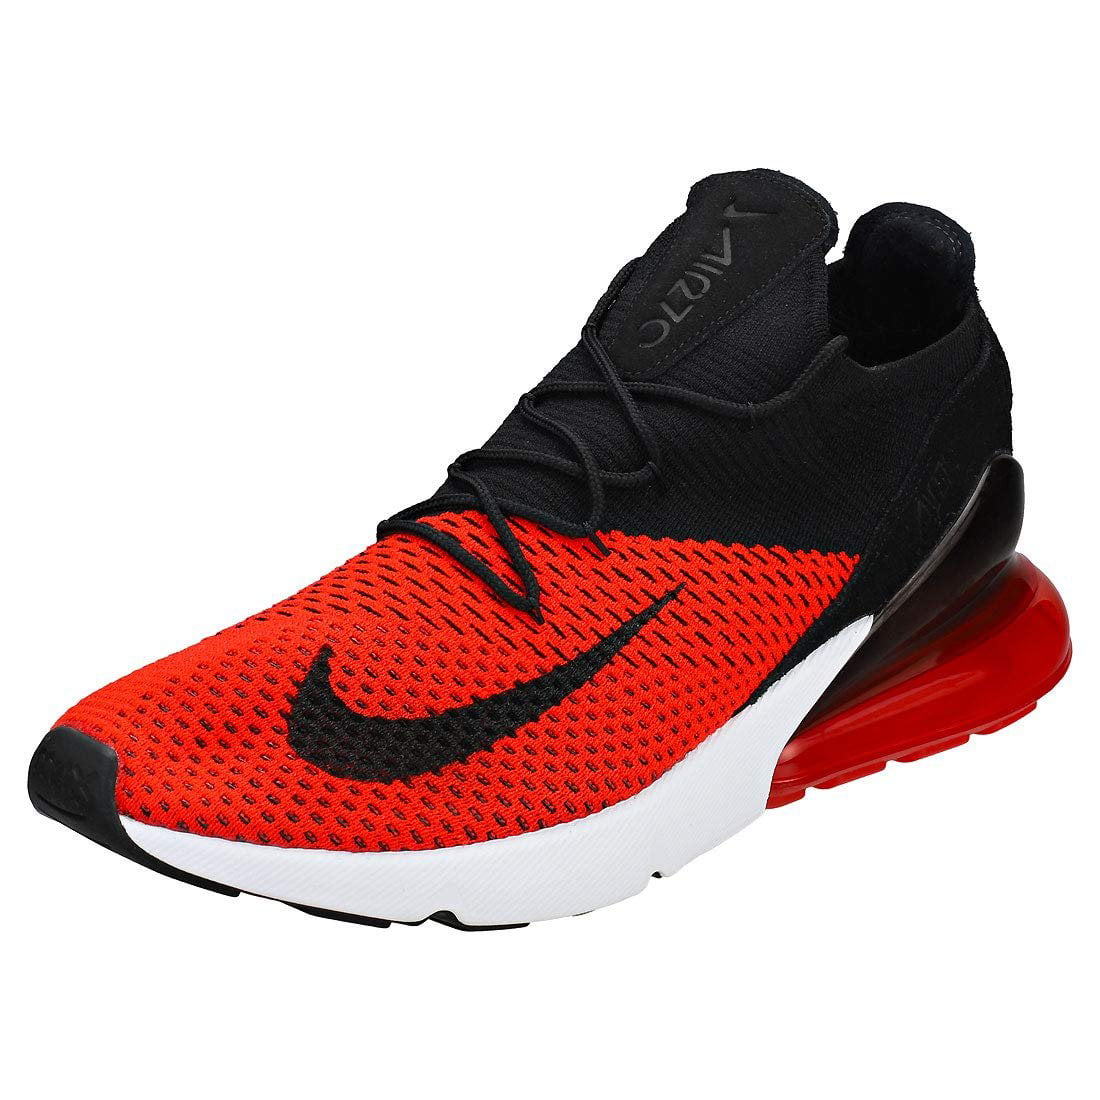 Nike Air Max 270 Flyknit - Chili Red/Black/Challenge Red/White Nylon Shoes 11.5 DM US - Walmart.com